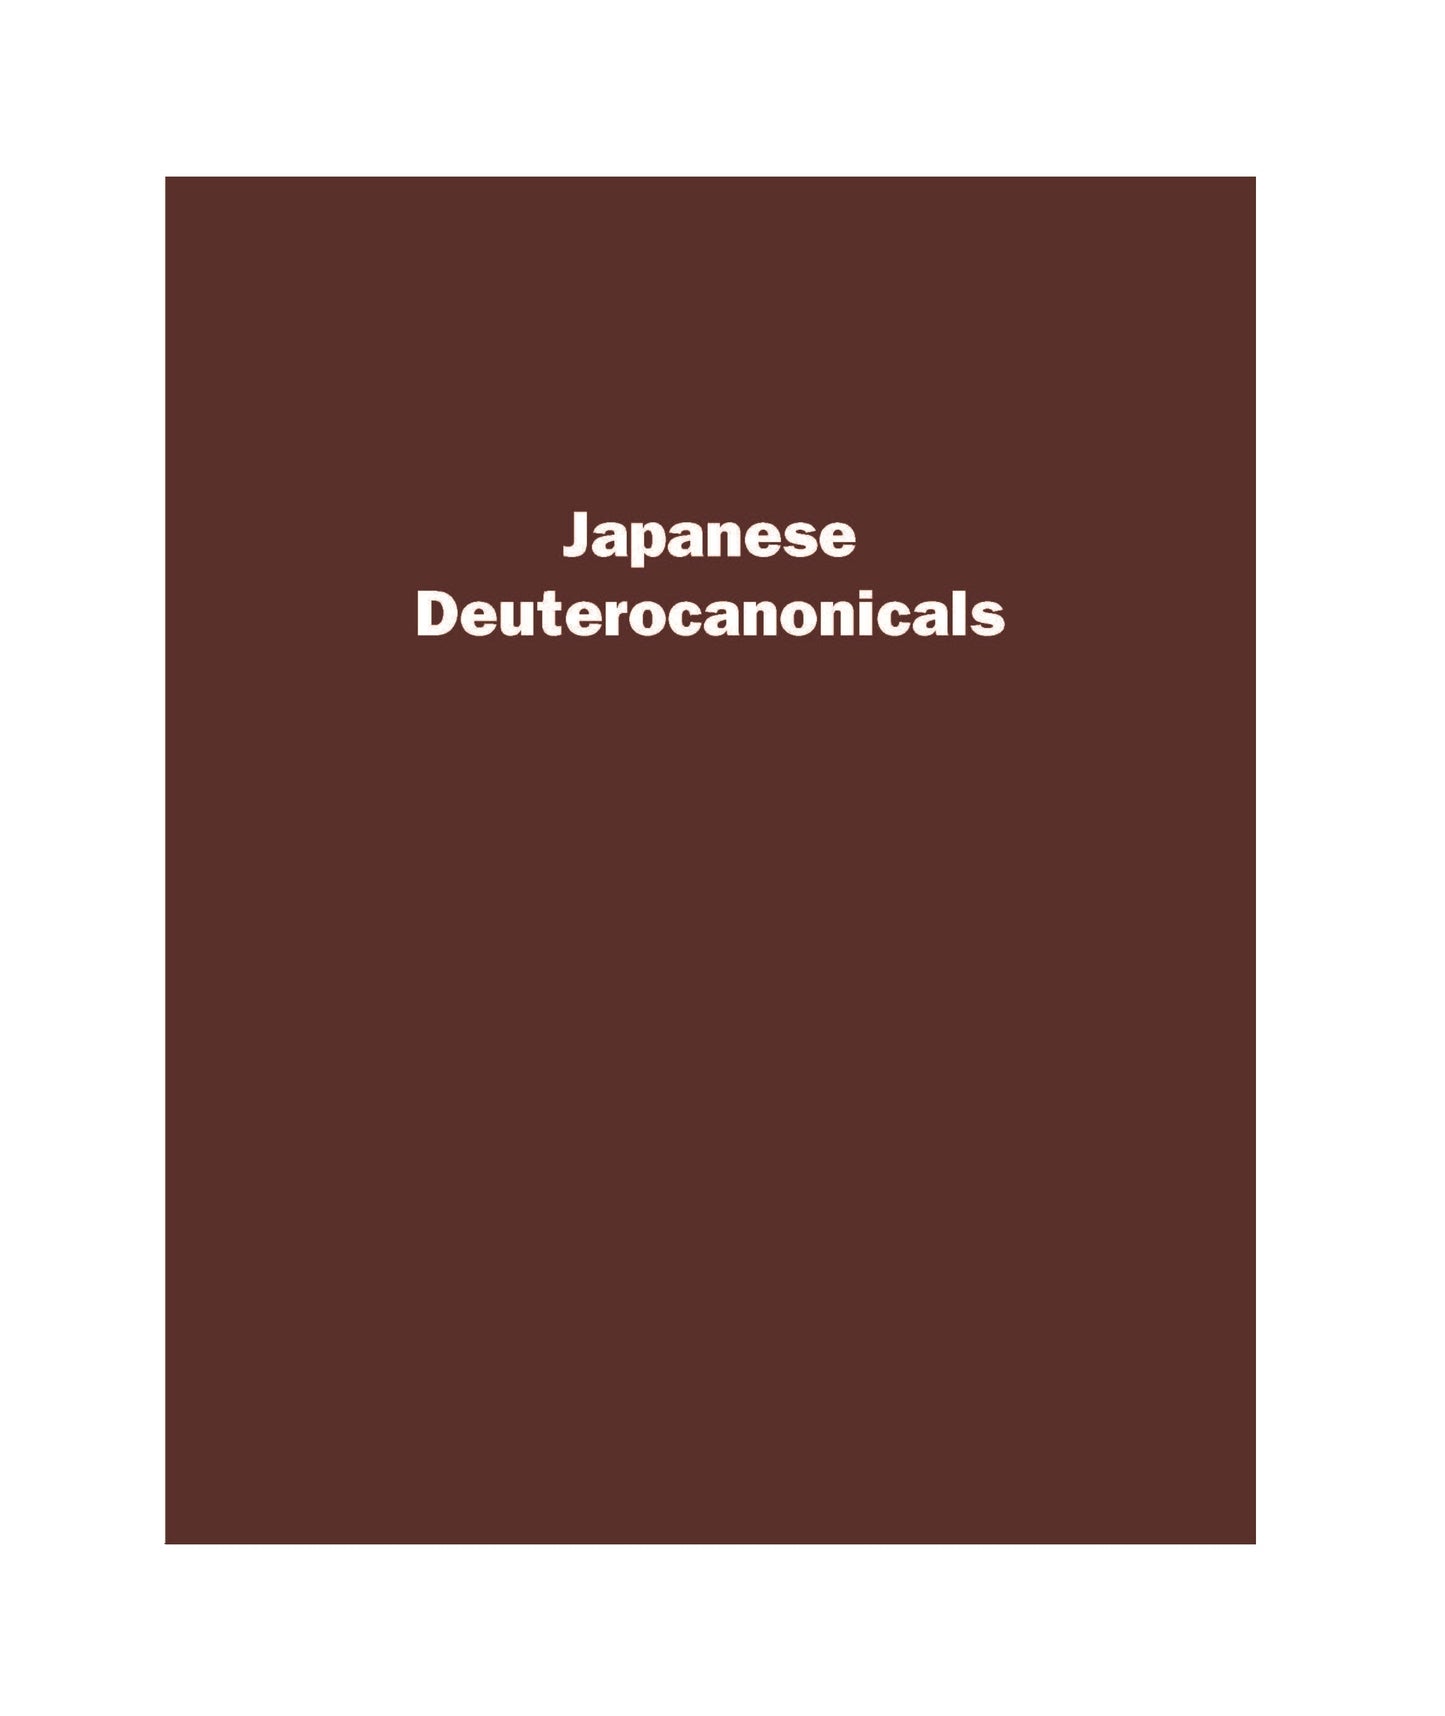 Deuterocanônicos Japoneses - Impressão sob Demanda